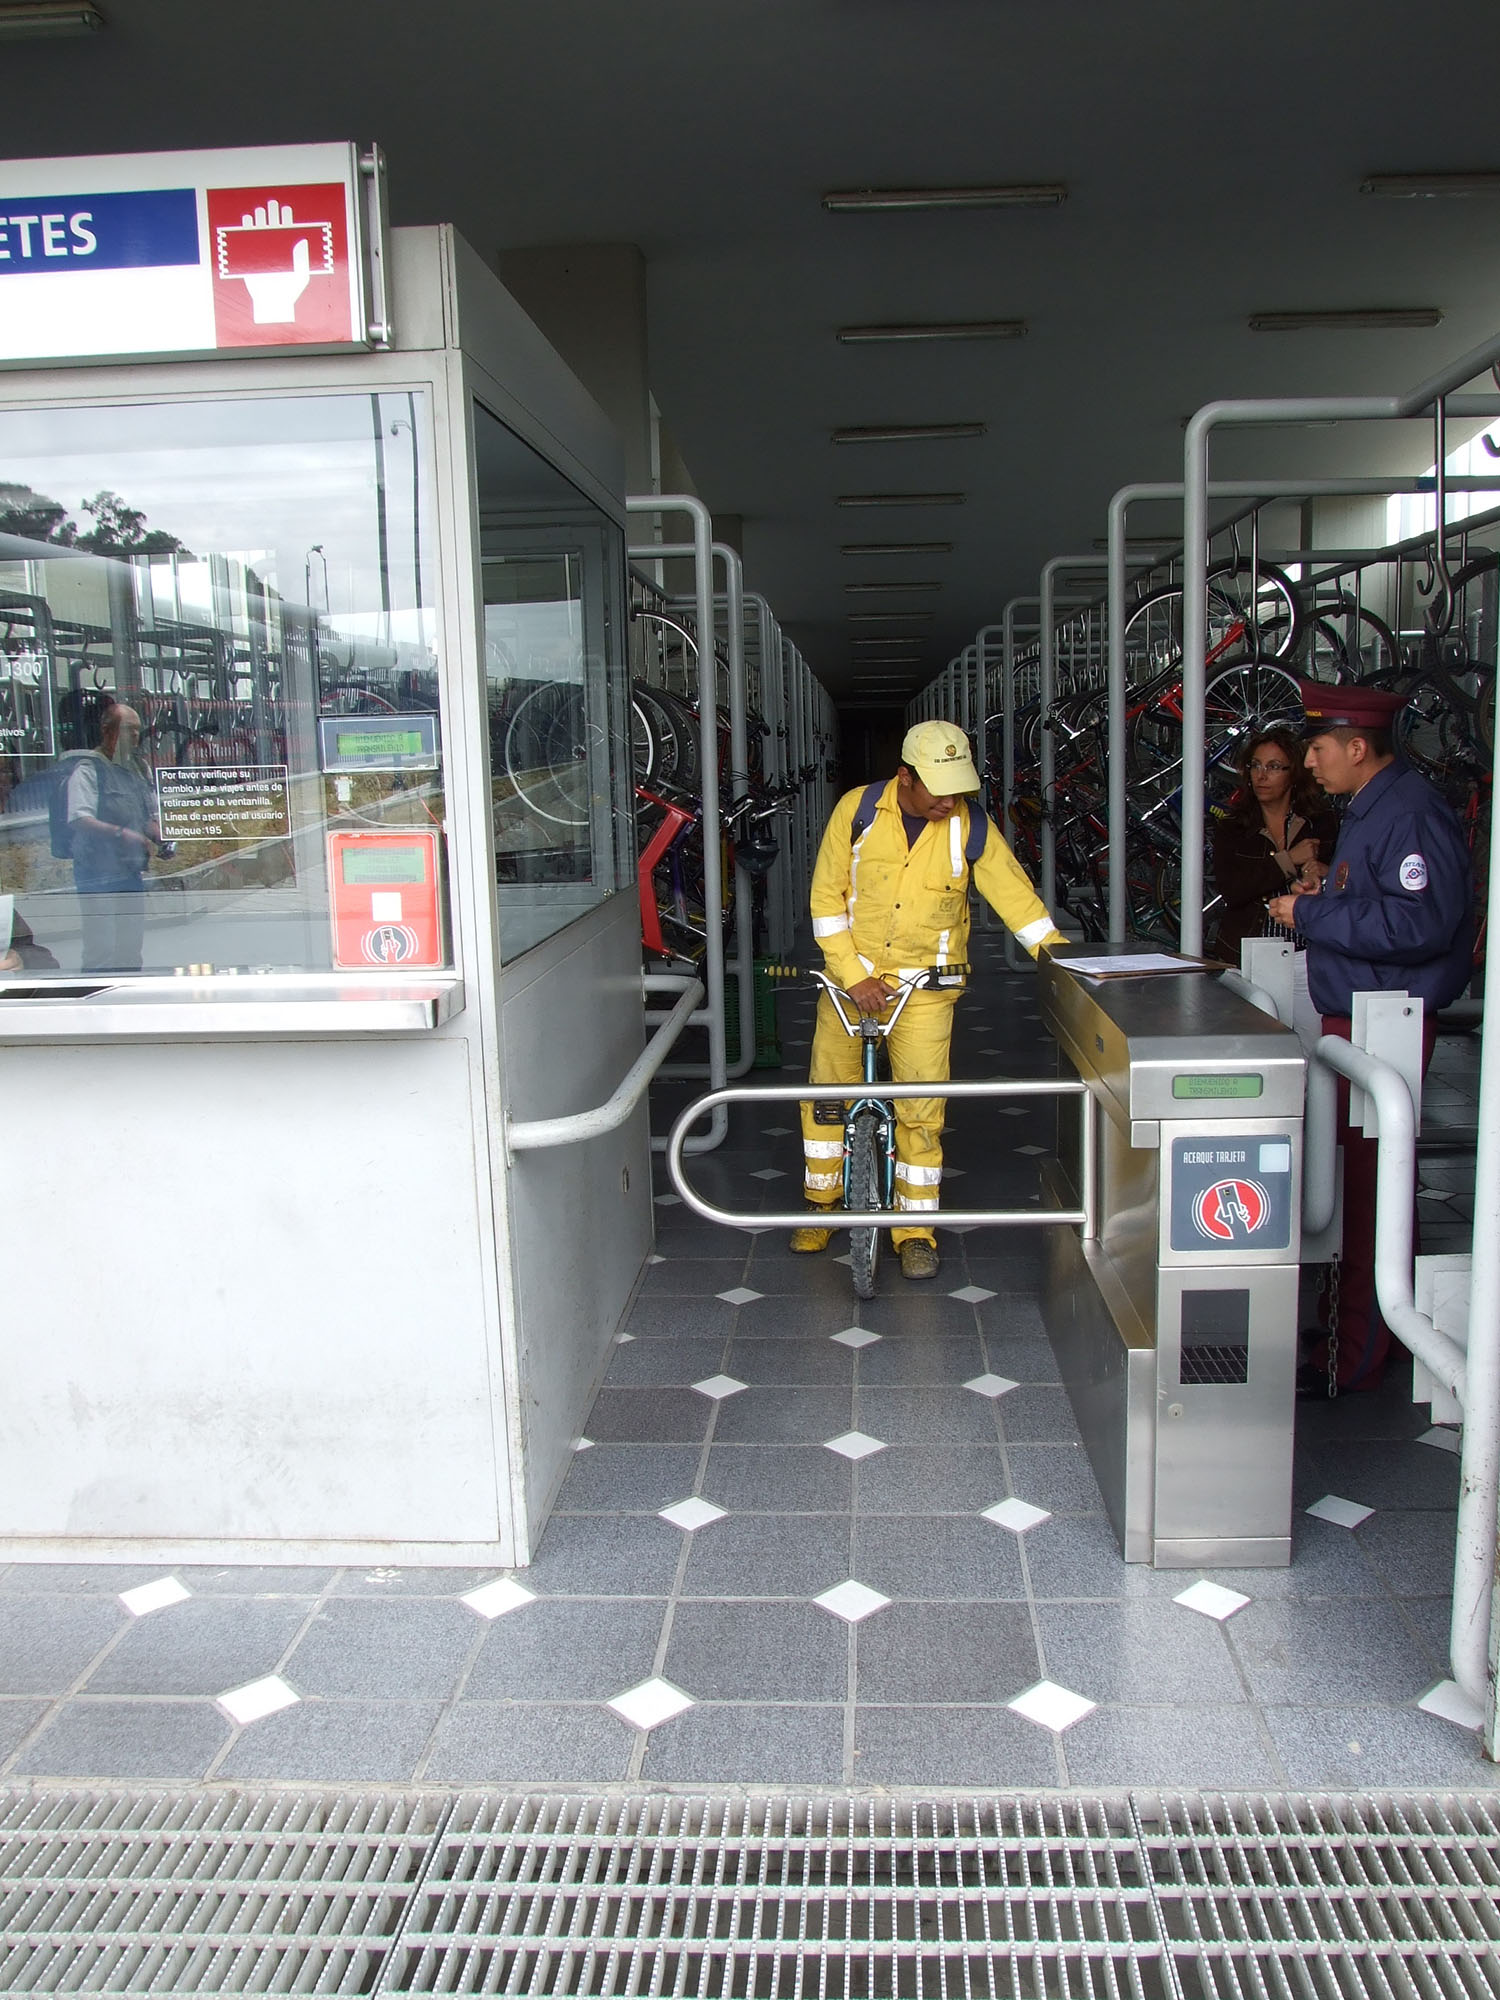 Fig. 31.35 Secure bike parking at a BRT terminal in Bogotá